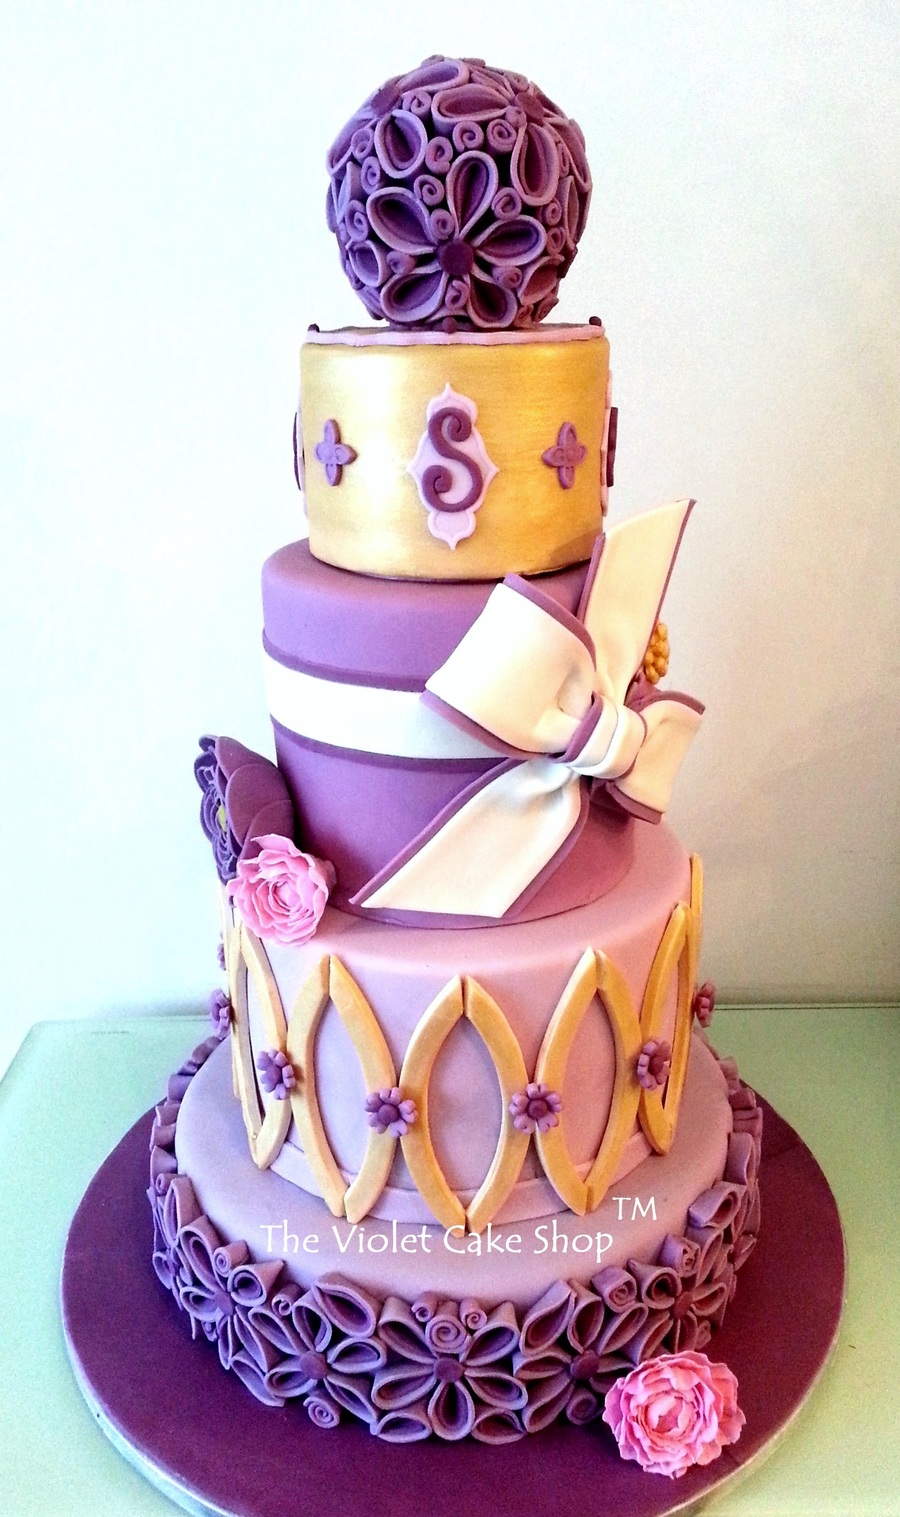 Heartfelt Baking: Pink and Purple Cake Design Tutorial 💜🩷 - YouTube